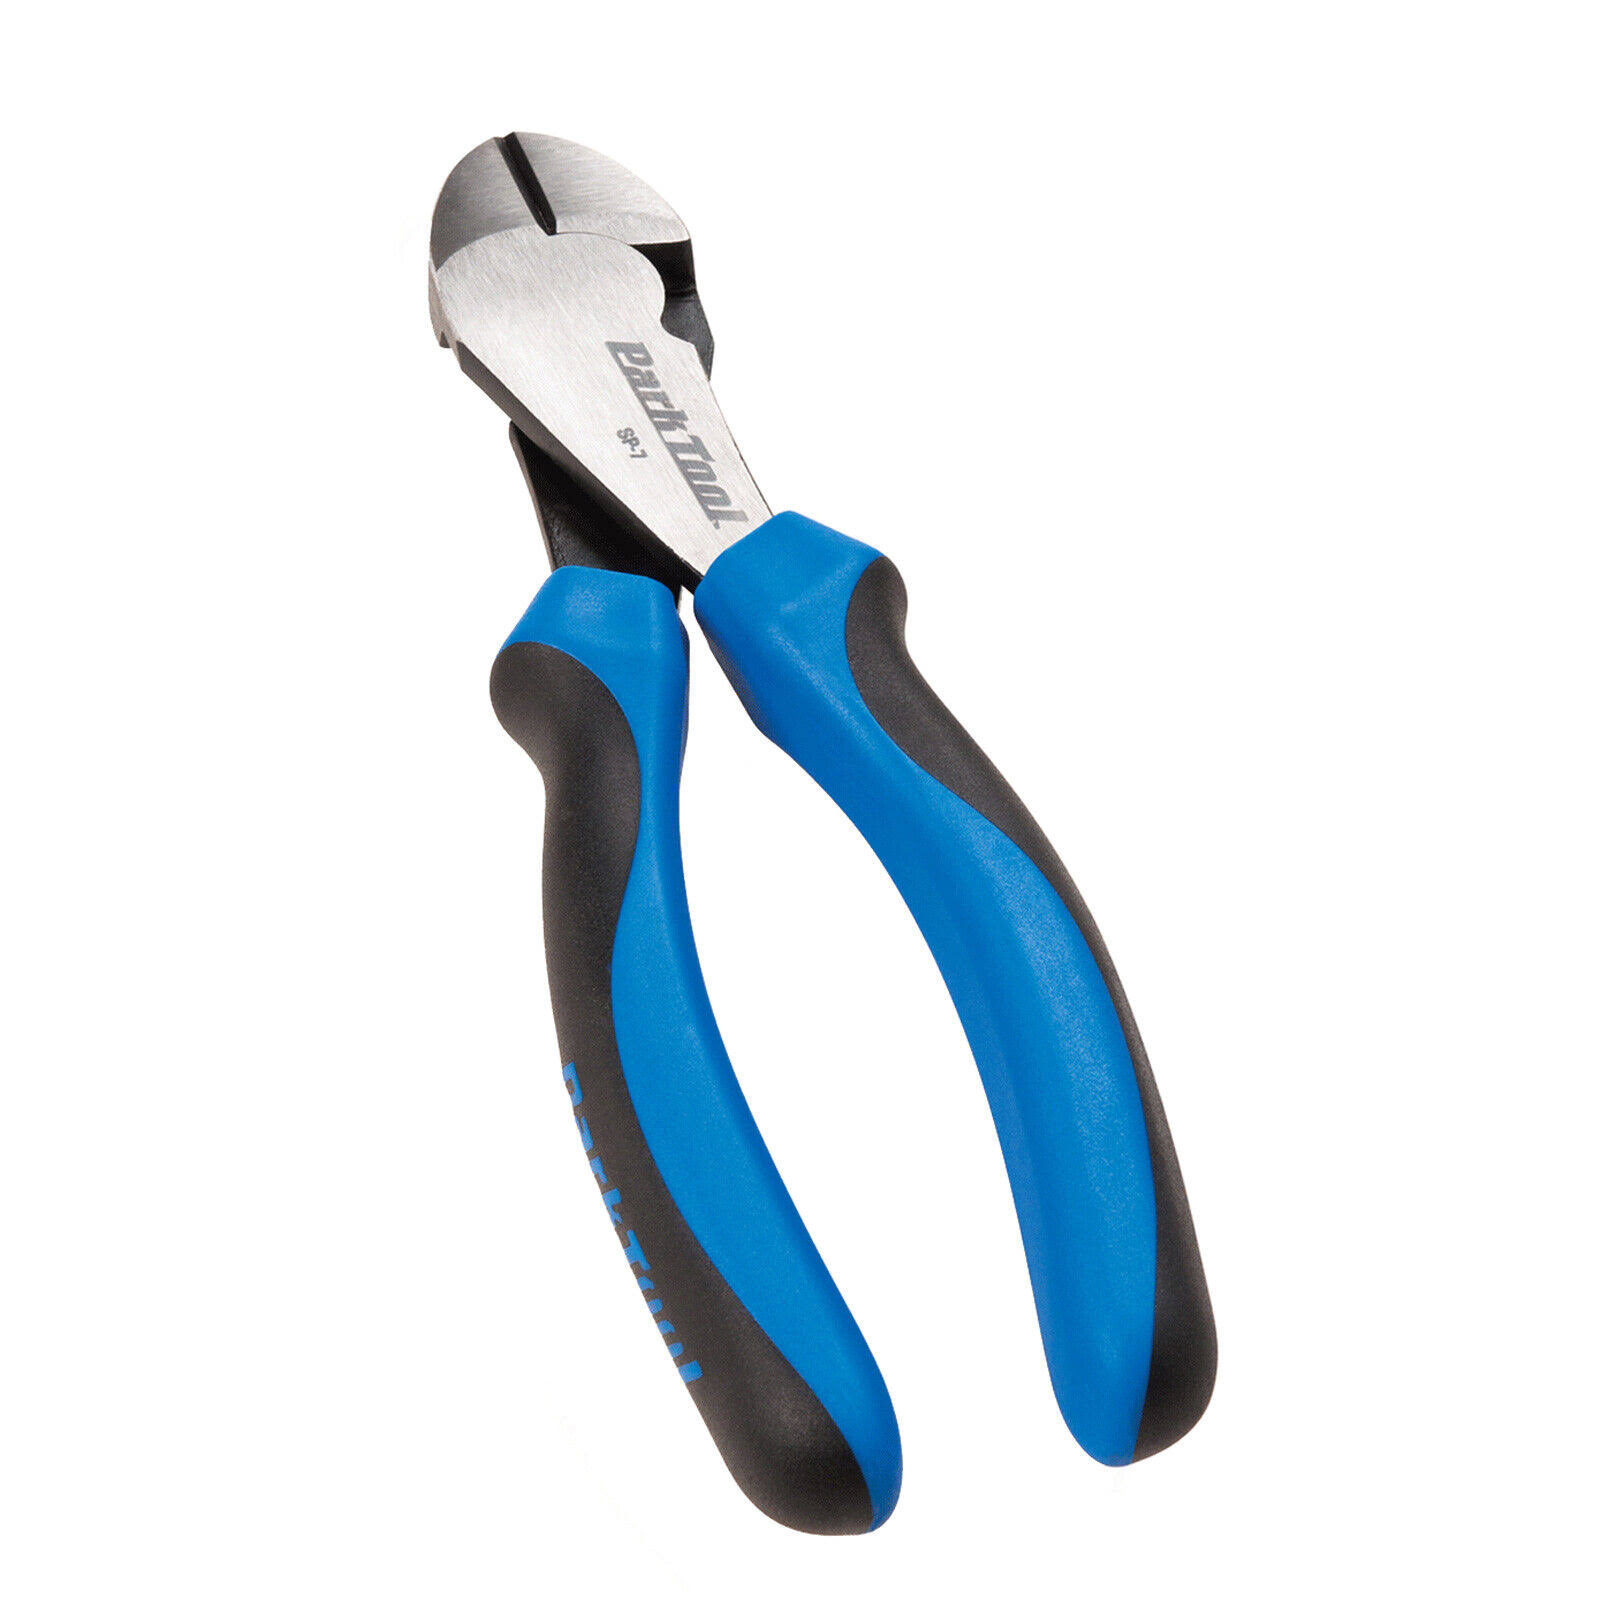 Park Tool Side Cutter Pliers - Blue